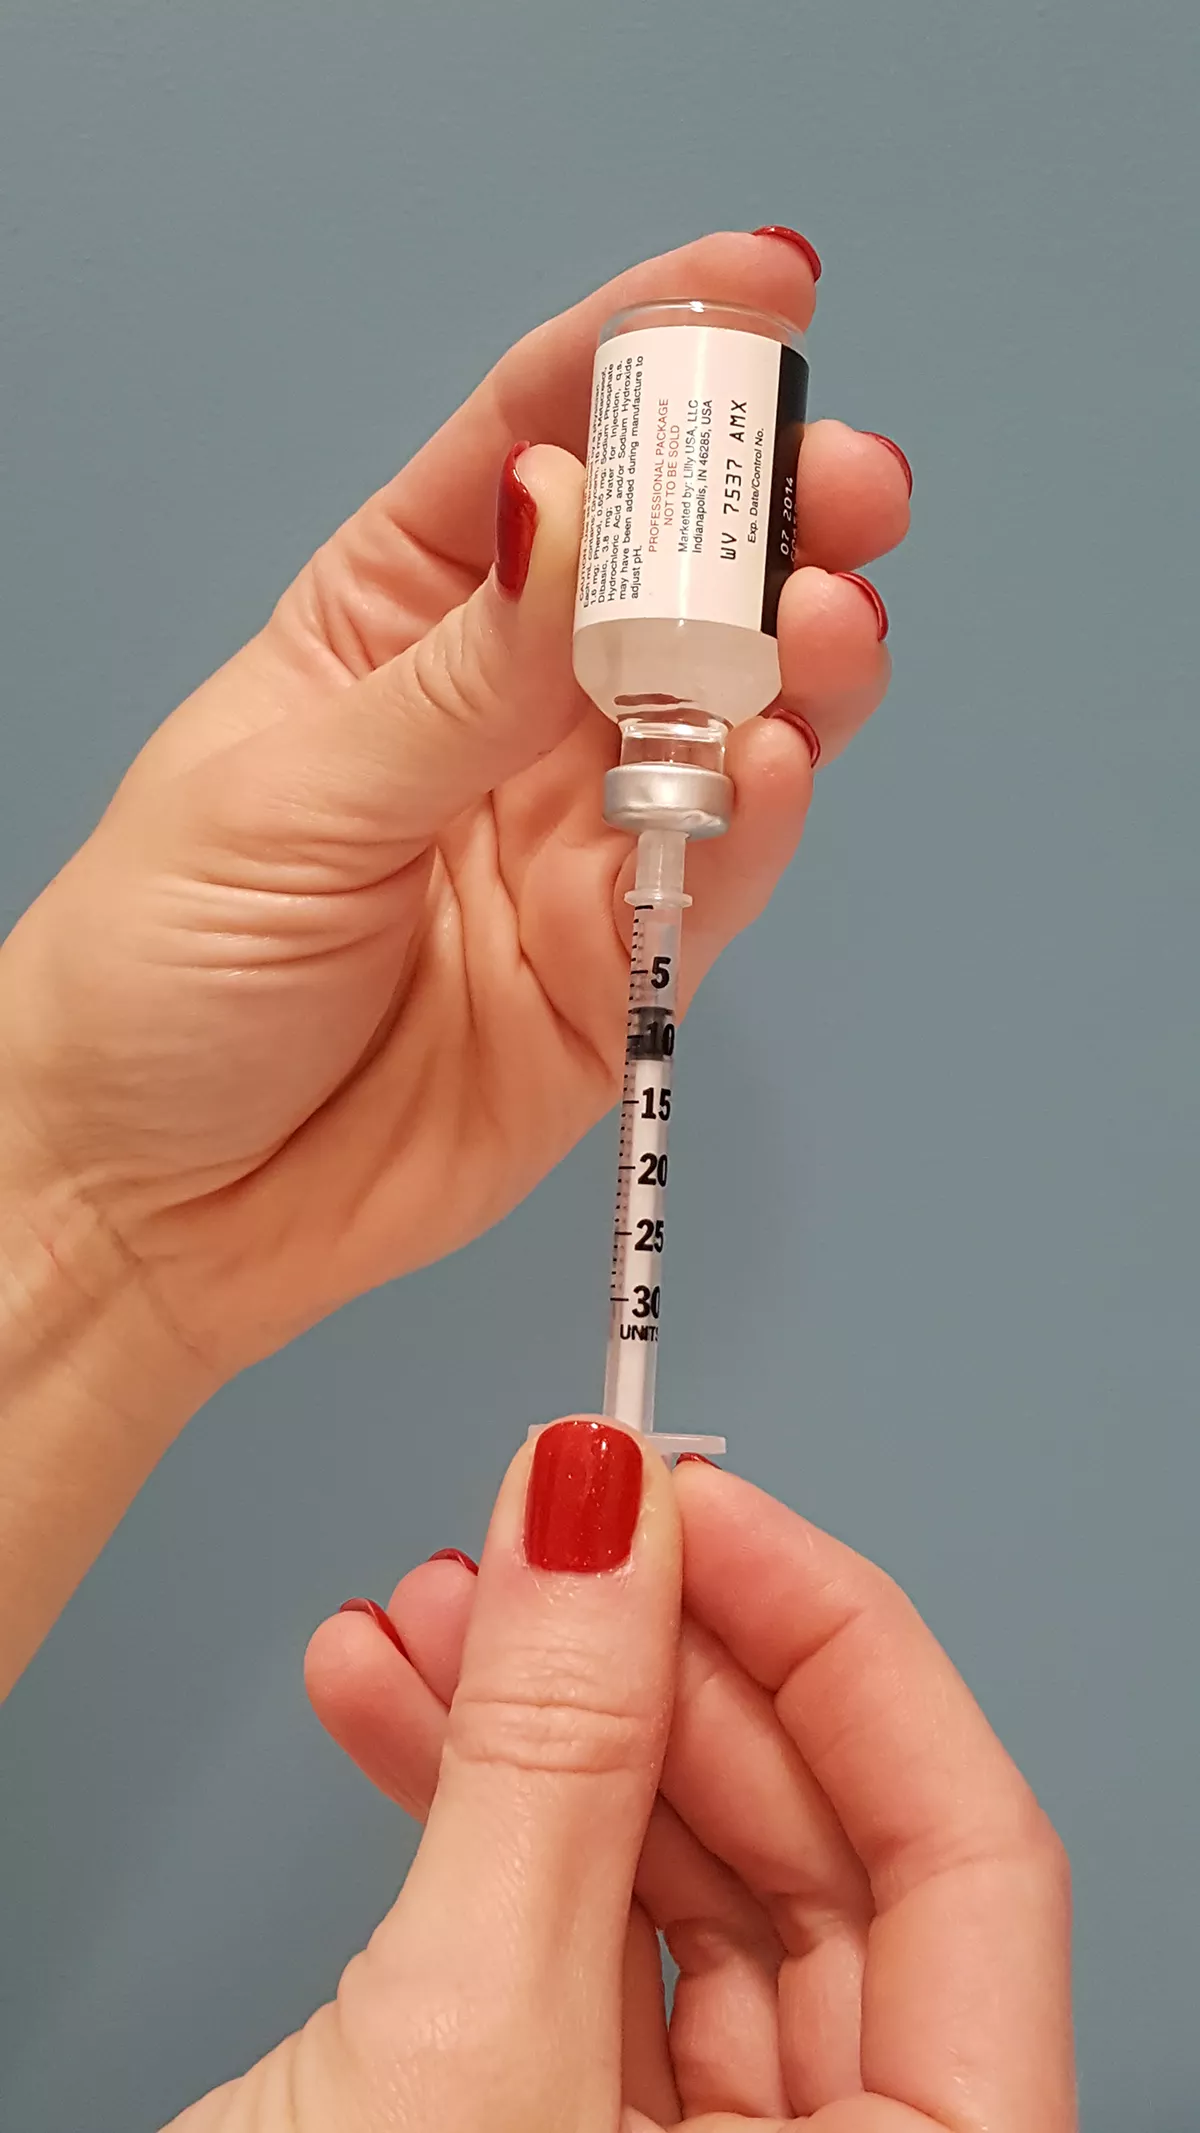 insulin drawing insulin into syringe, photo